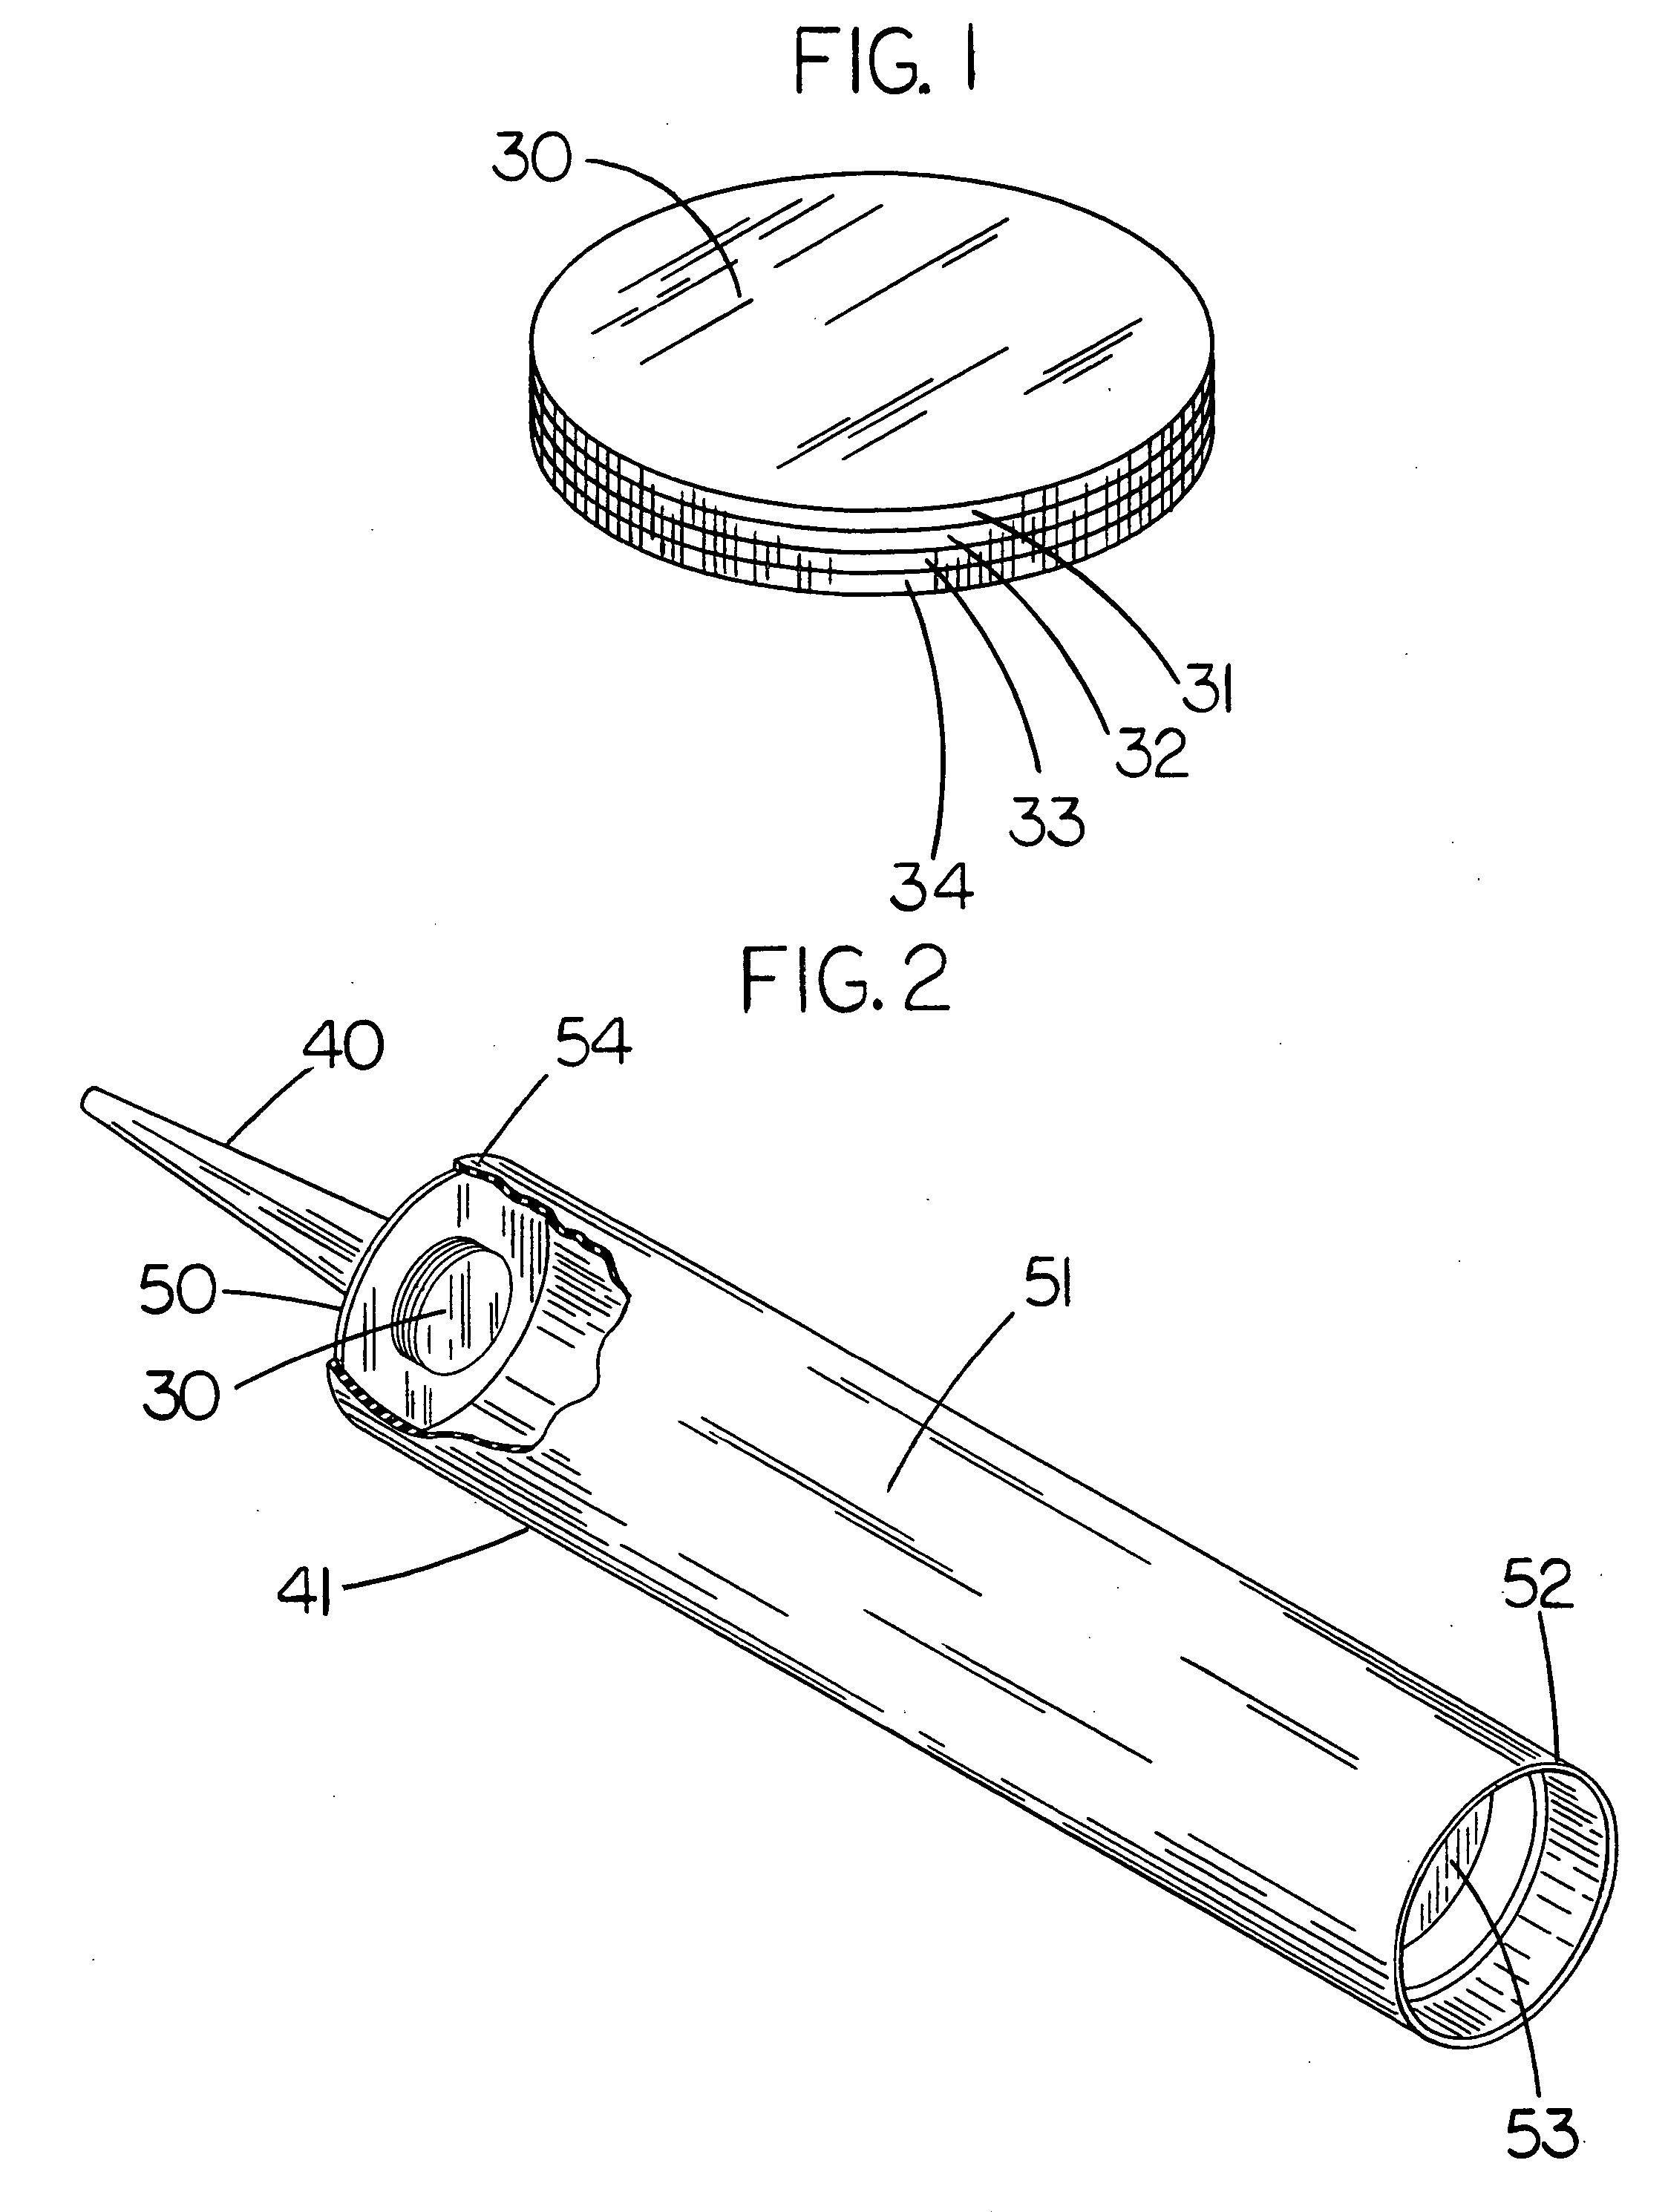 Cartridge nozzle seal opened by internal cartridge pressure